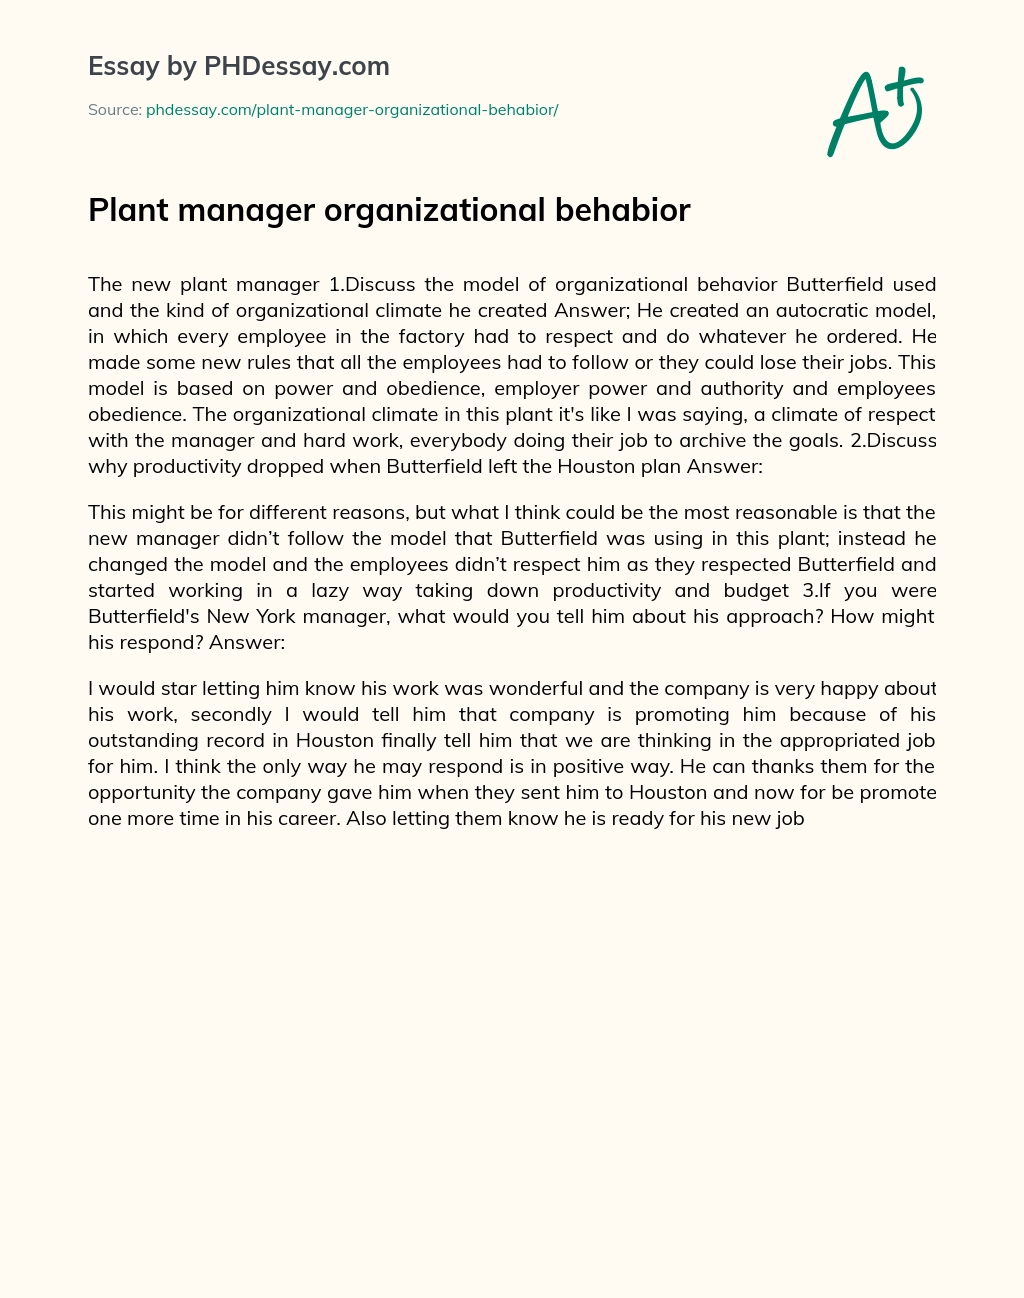 Plant manager organizational behabior essay